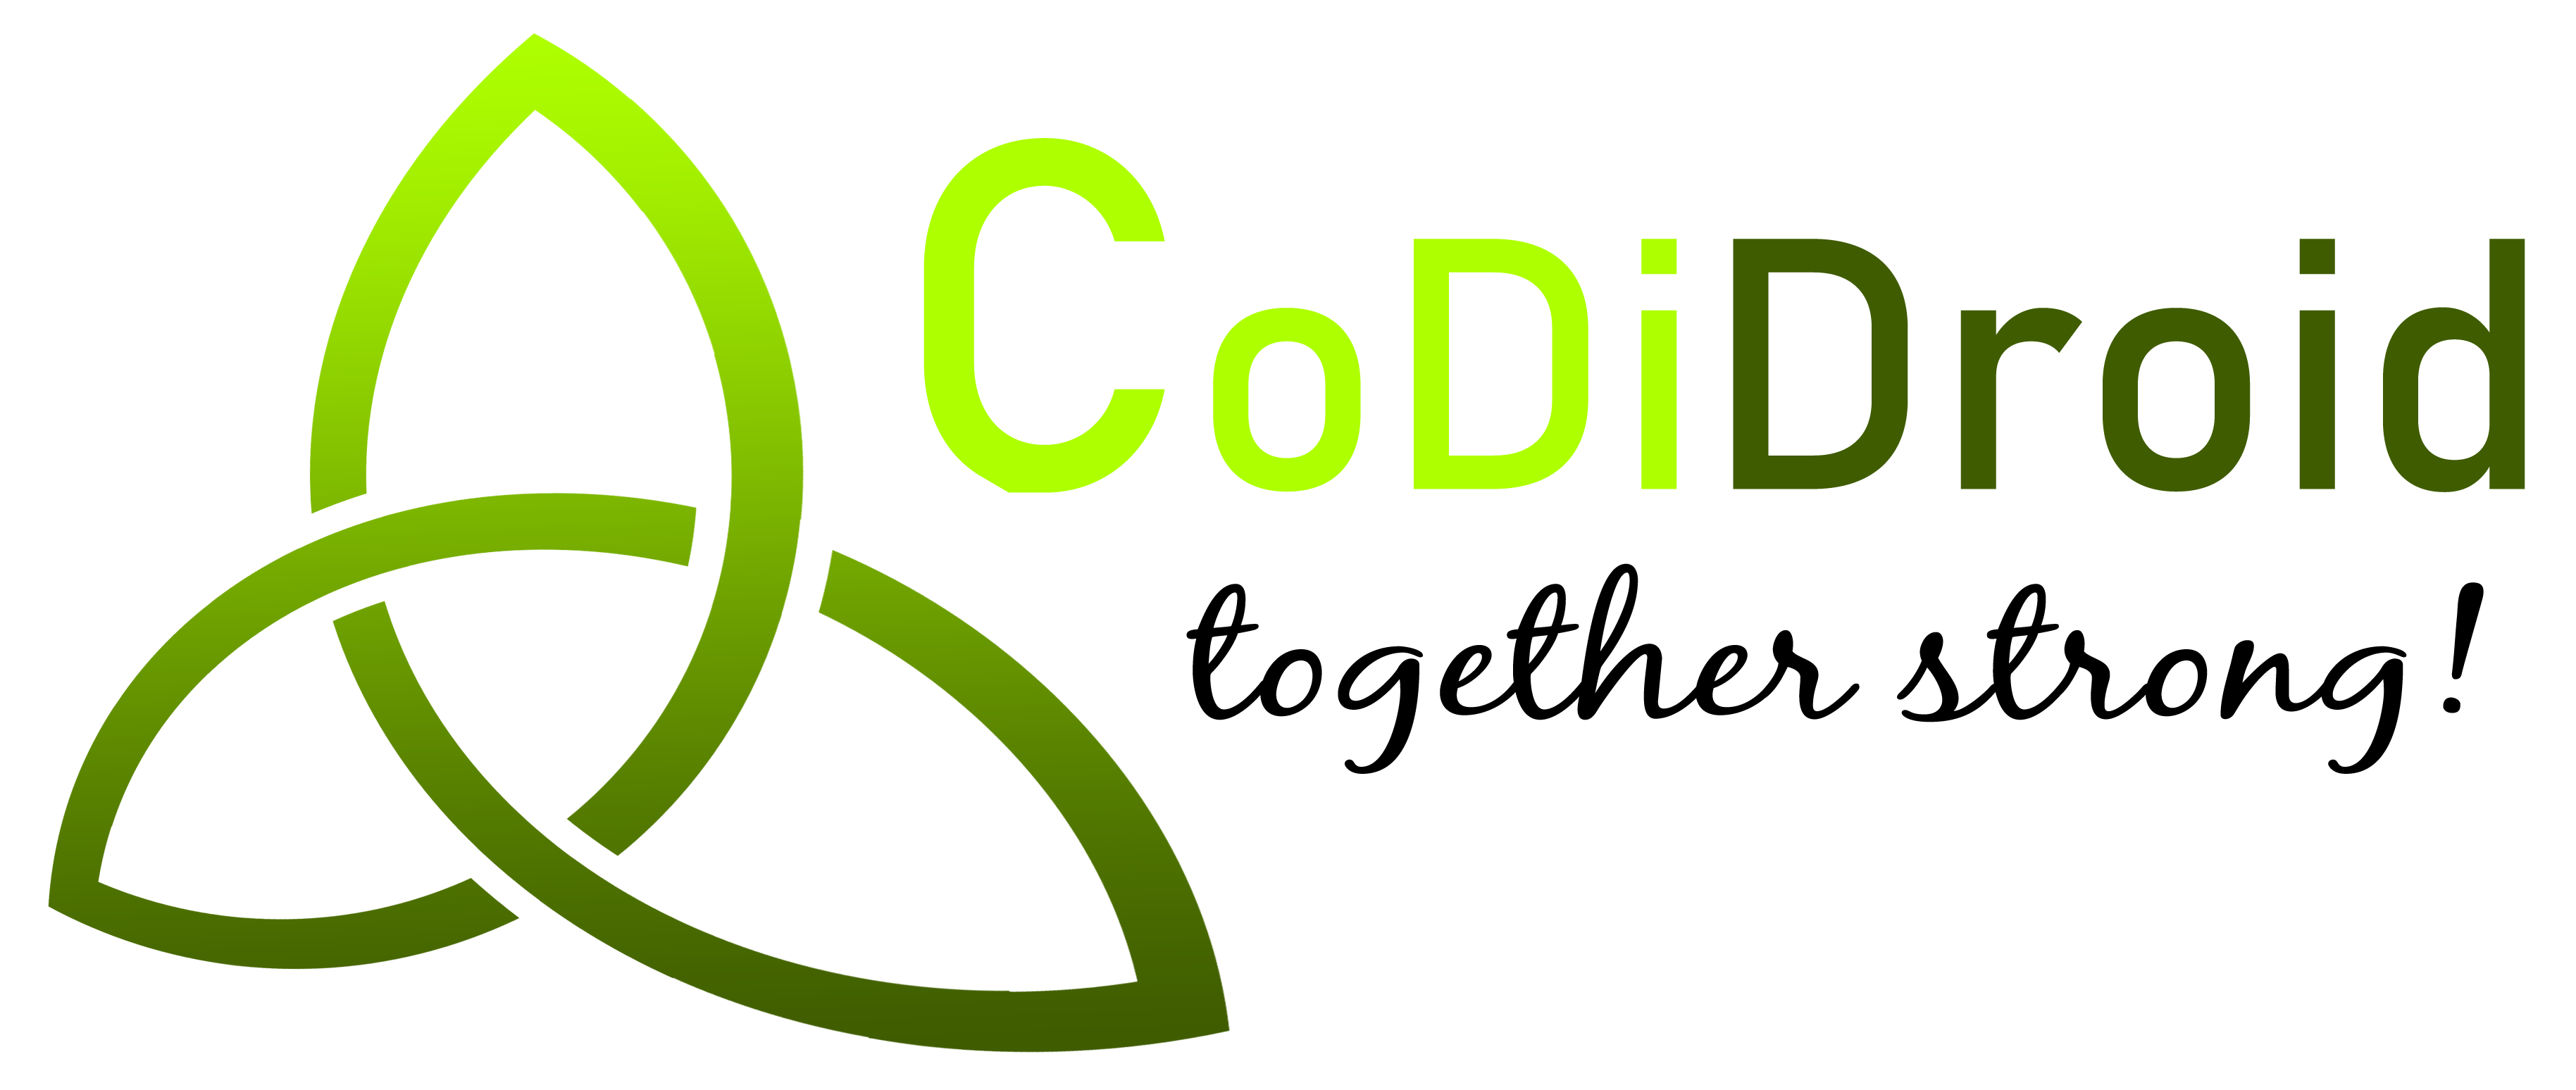 CoDiDroid